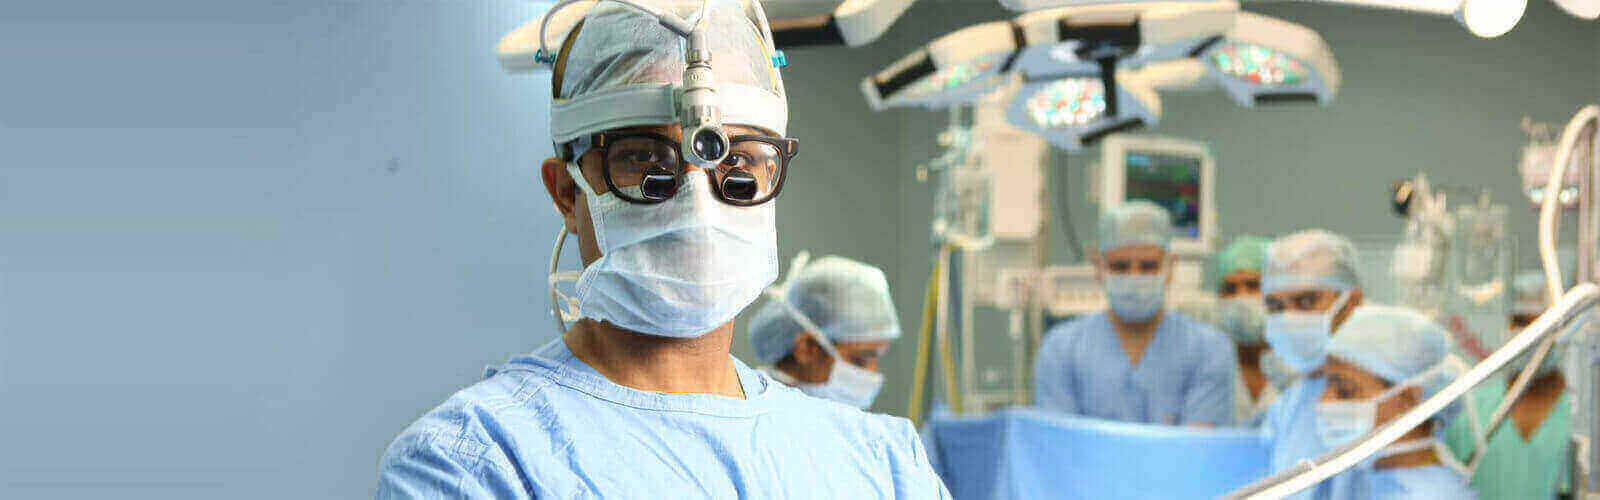 Heart Bypass Surgery in Costa Rica